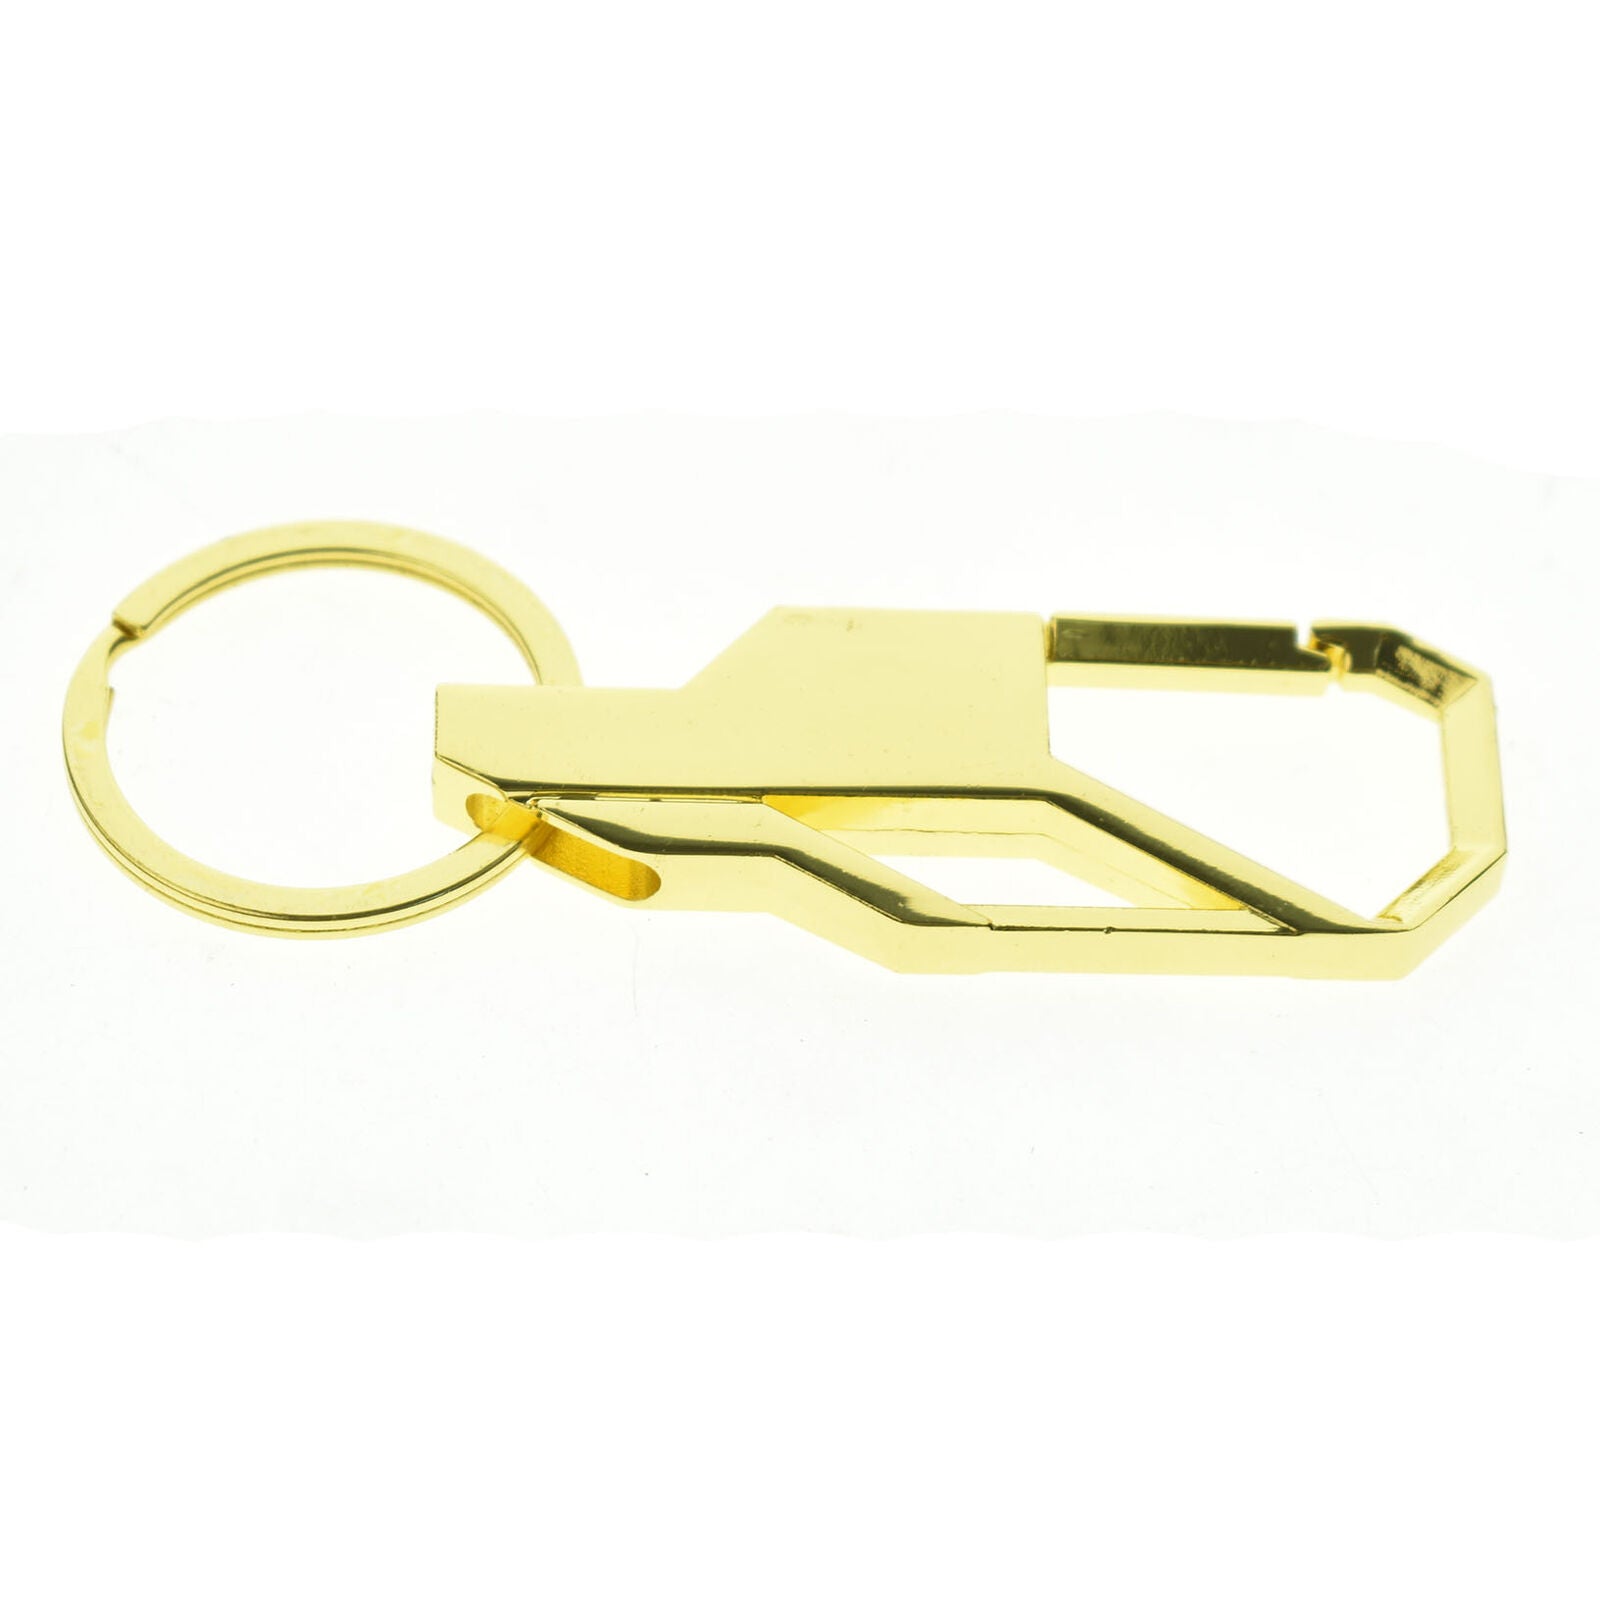 1x Men Creative Alloy Metal Keyfob Gift Auto Car Keyring Keychain Key Chain Ring